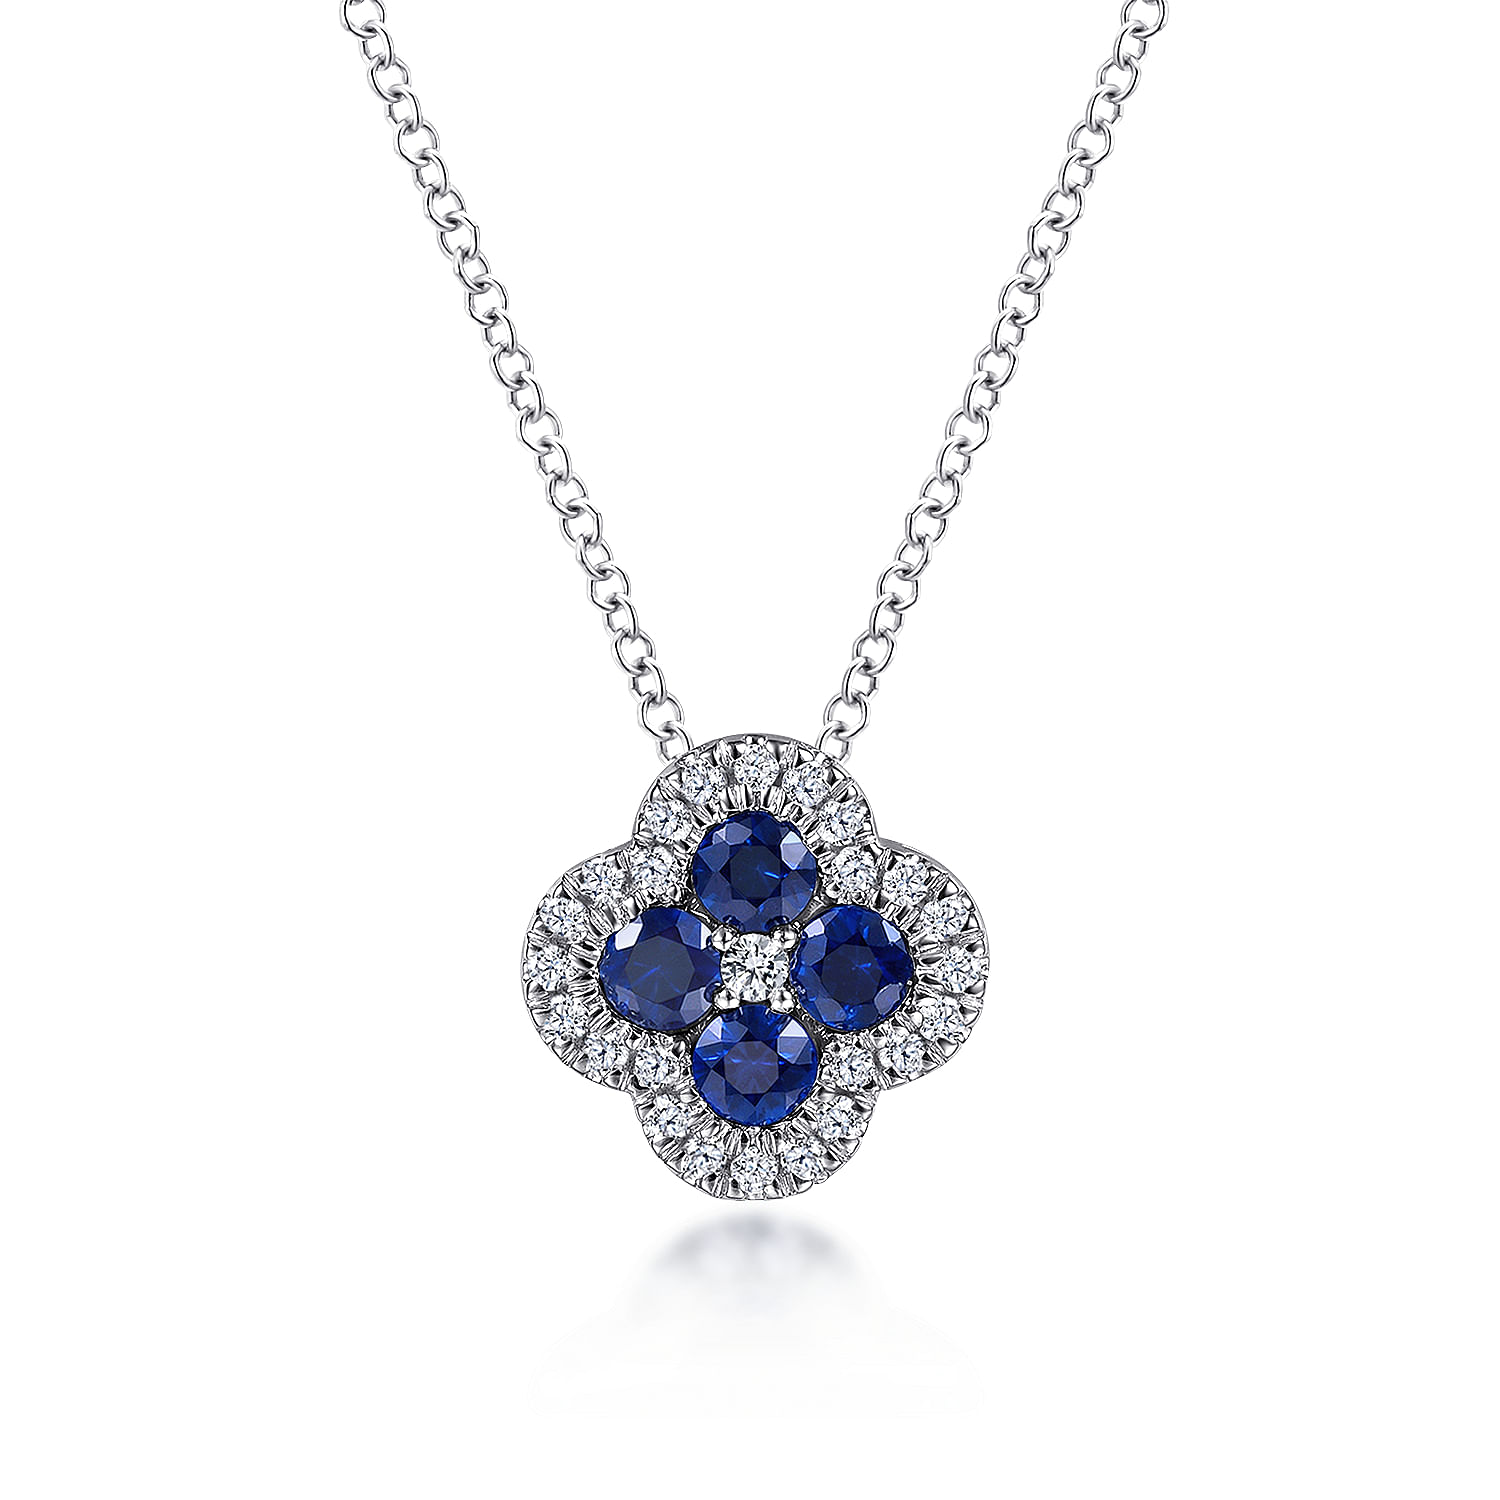 14K White Gold Diamond & Sapphire Pendant Necklace